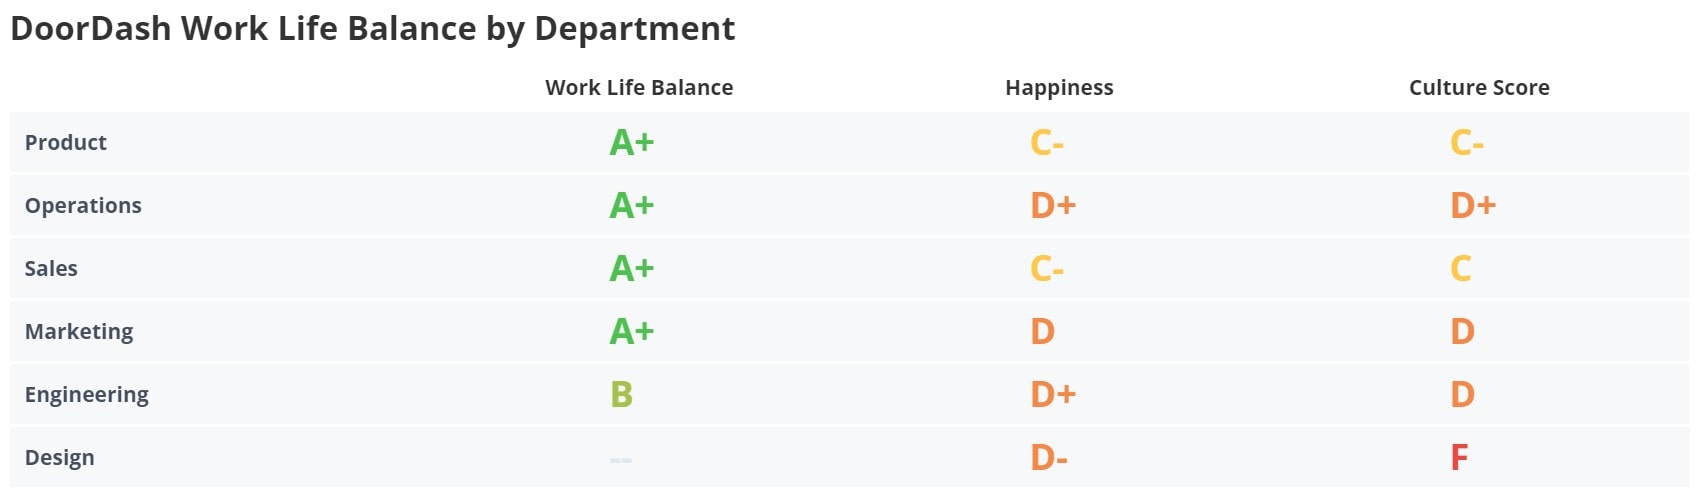 DoorDash Work-Life Balance by Department